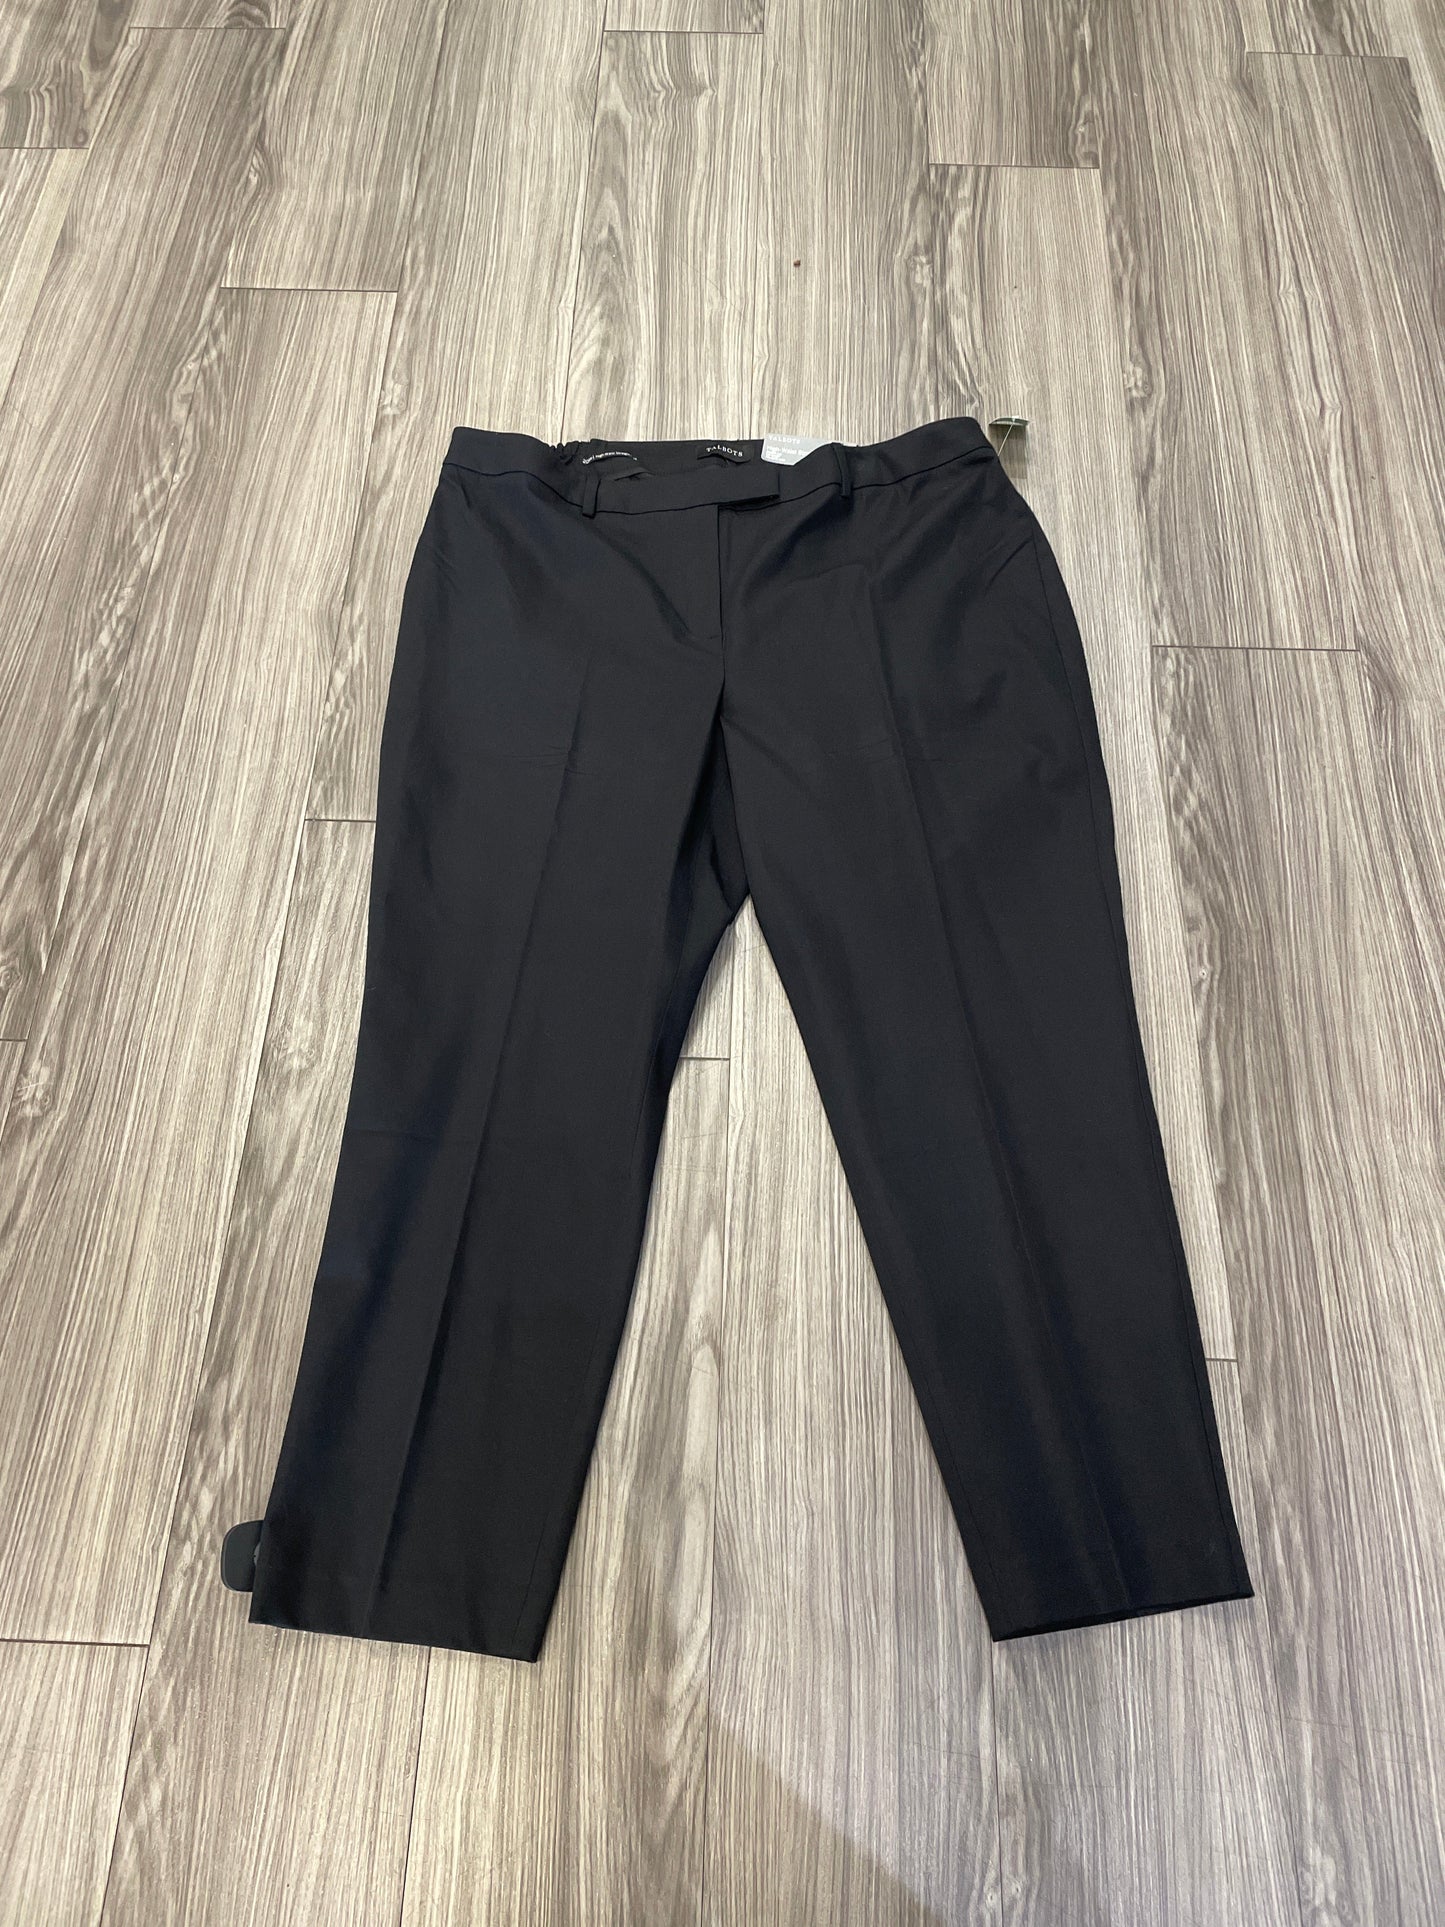 Black Pants Dress Talbots, Size 20